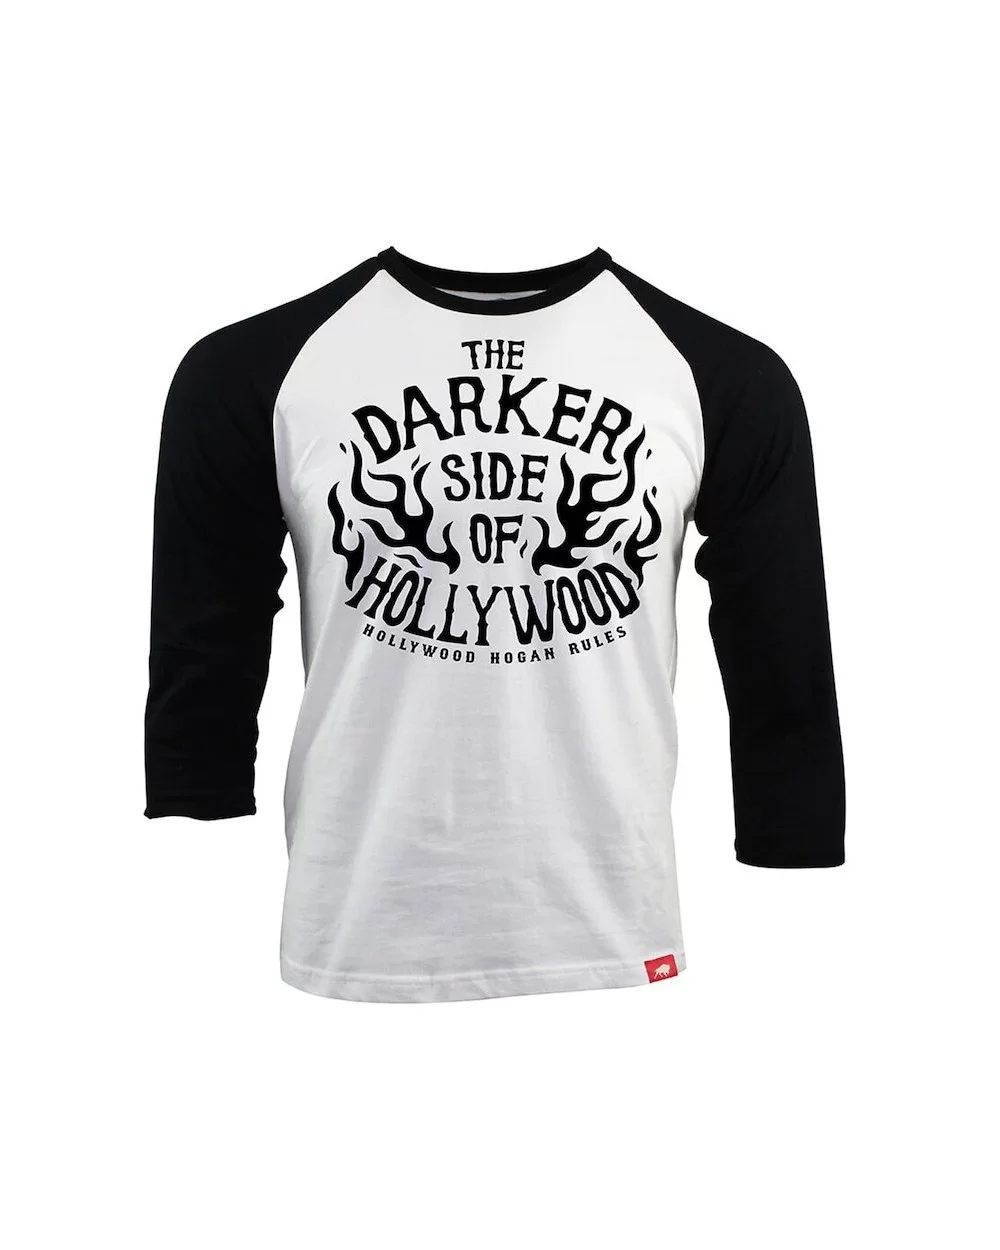 Men's Sportiqe White/Black Hulk Hogan The Darker Side of Hollywood Raglan 3/4-Sleeve T-Shirt $7.91 T-Shirts